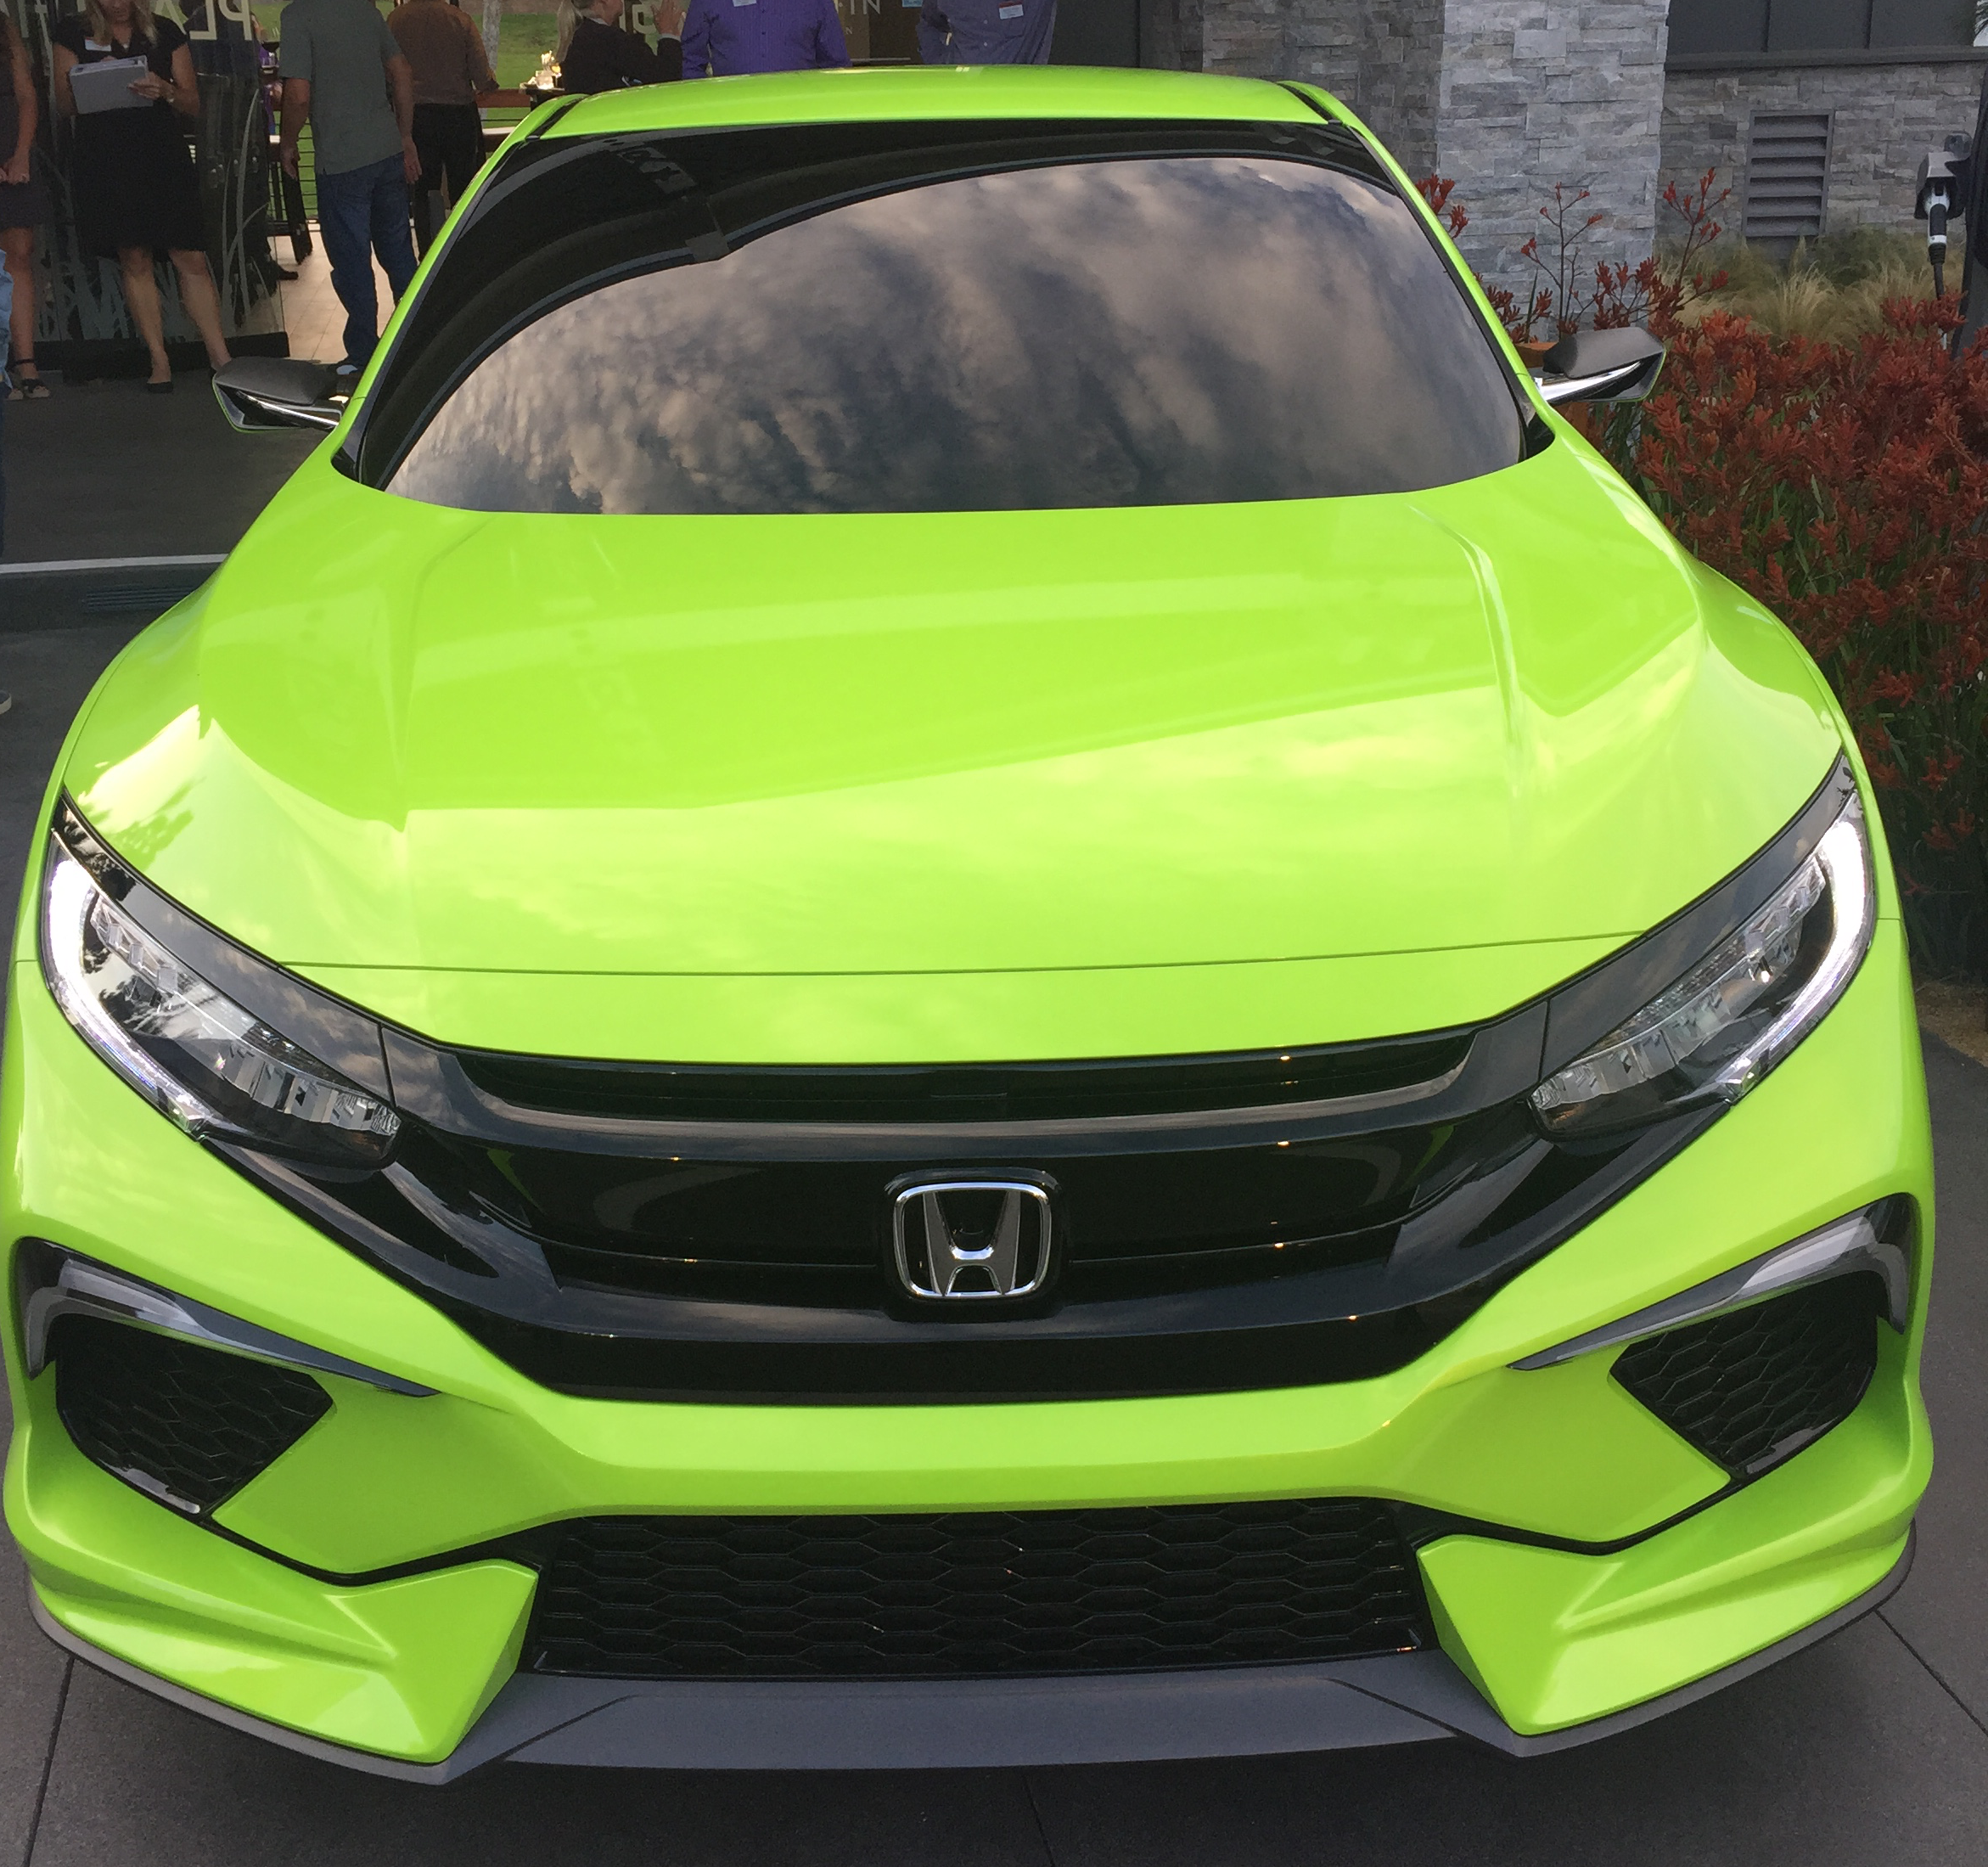 Honda Civic Coupe exterior 2018